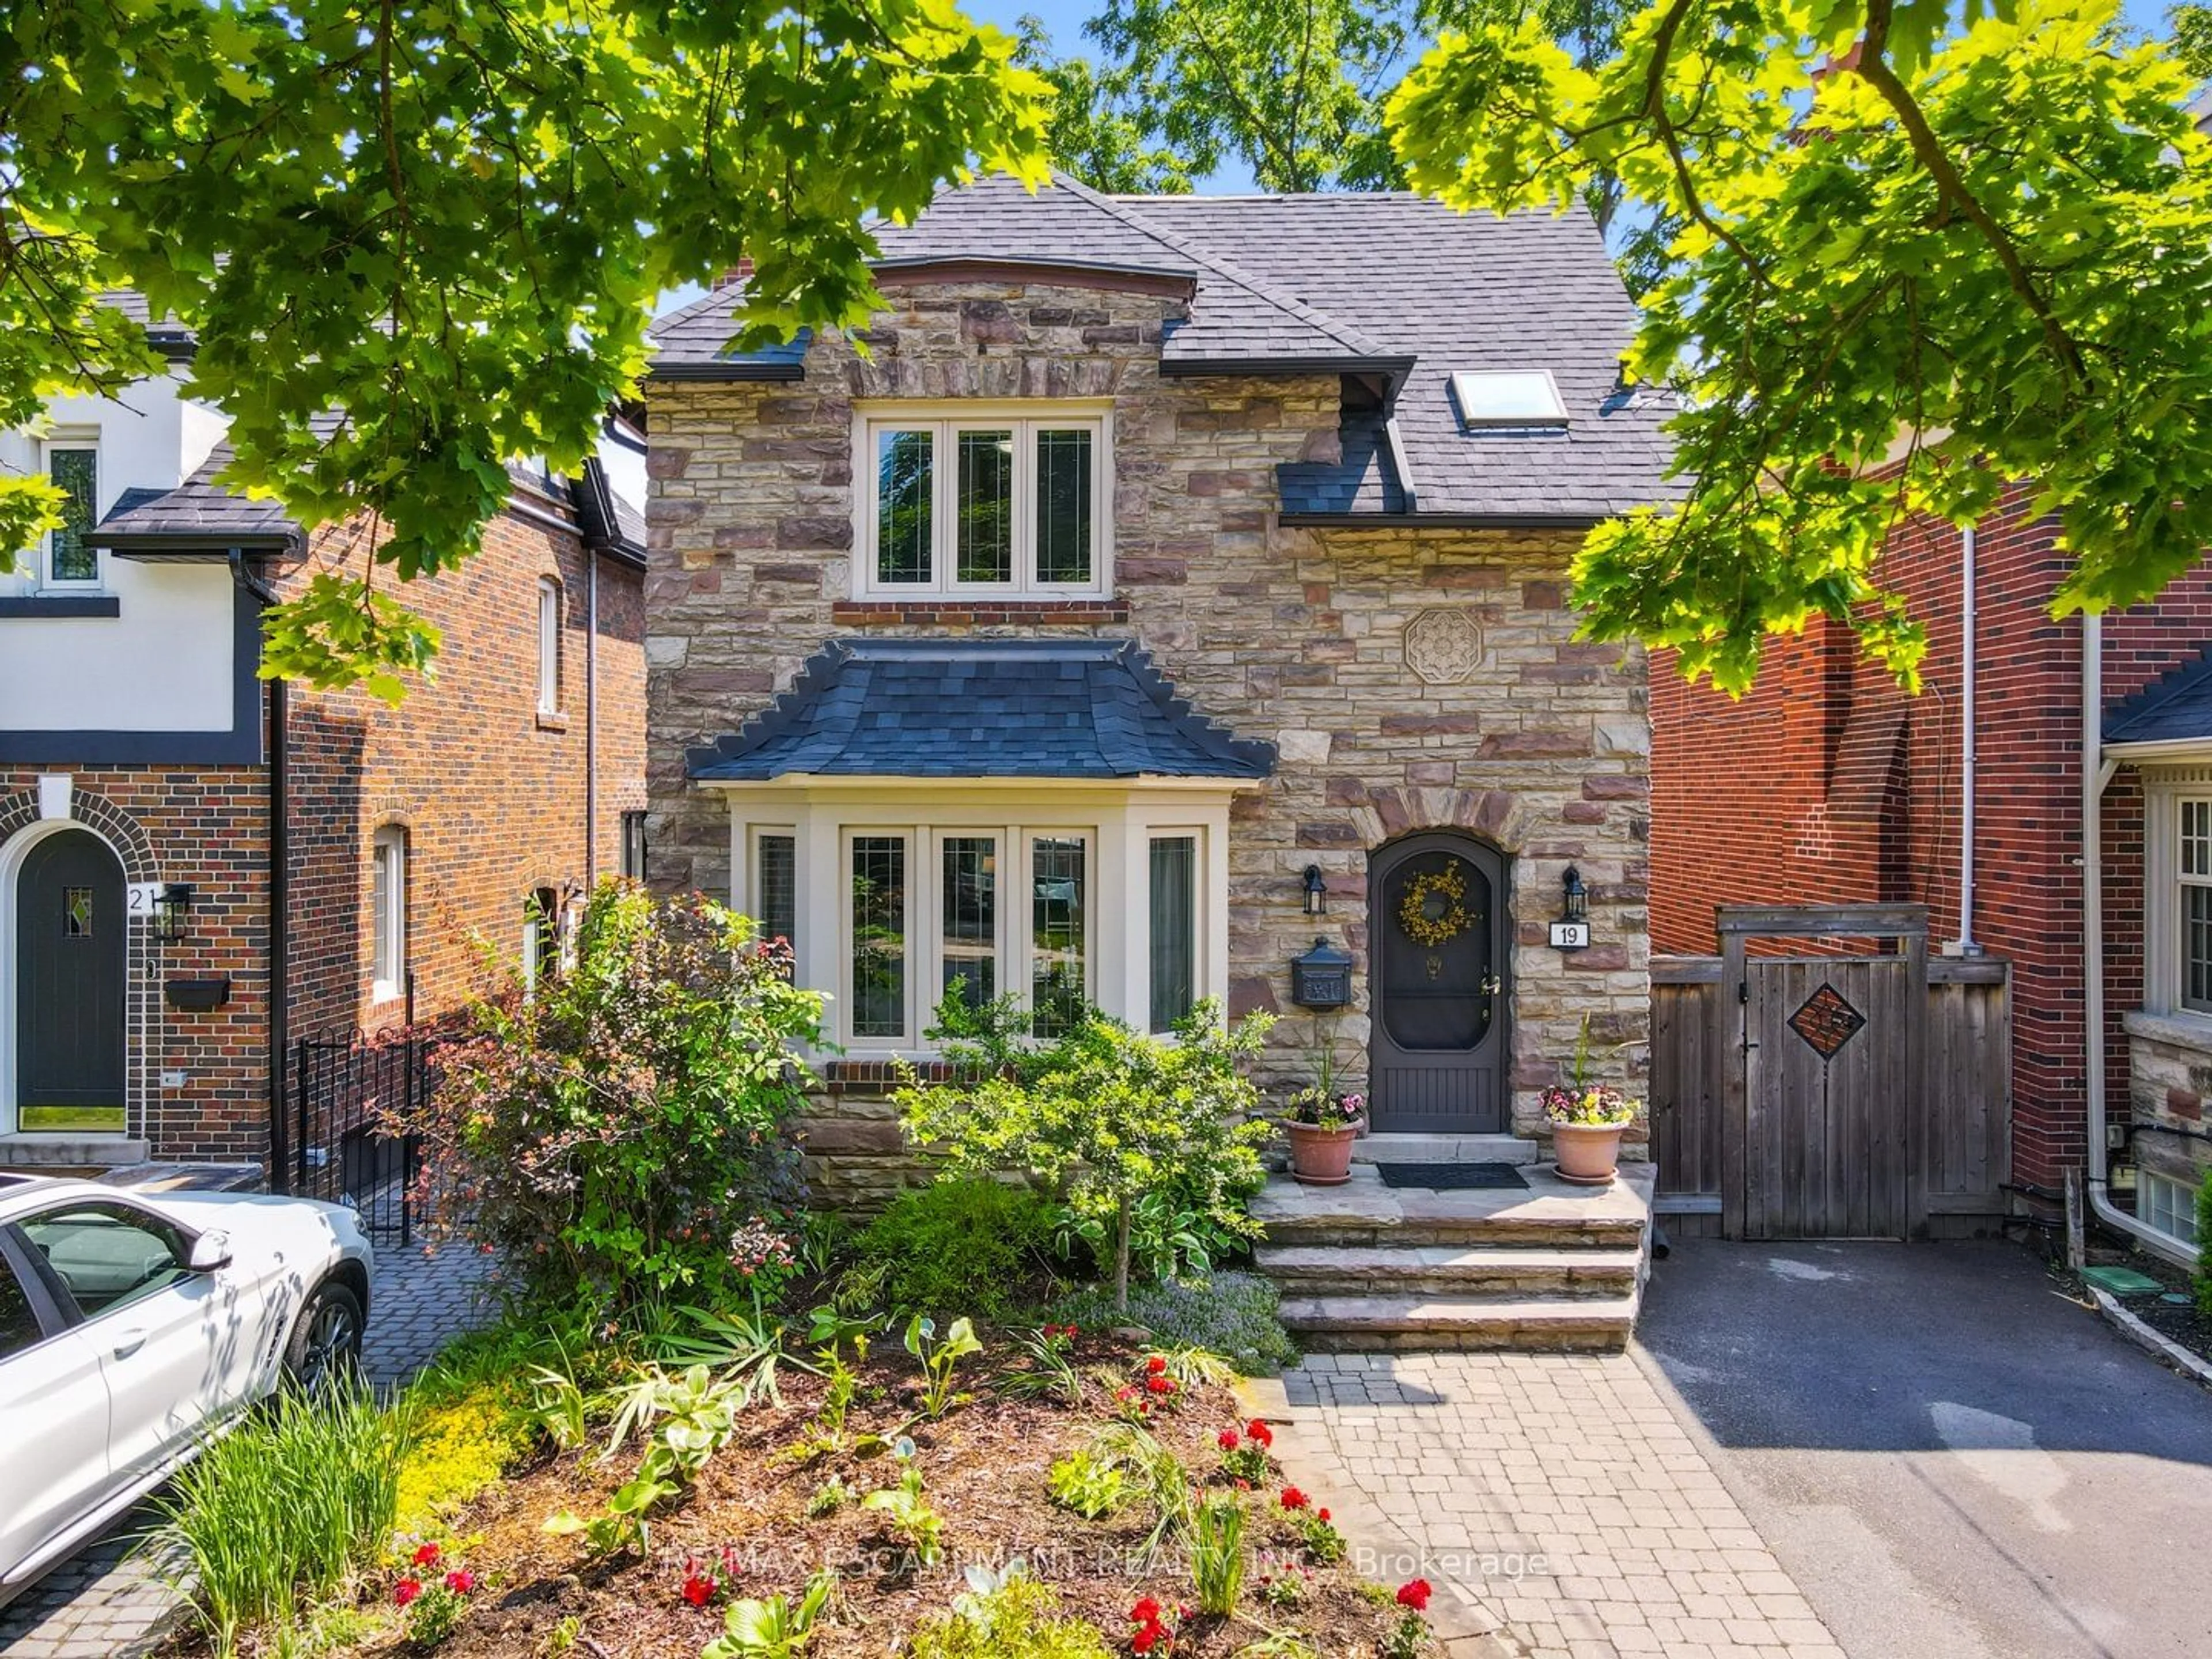 Home with brick exterior material for 19 Jackson Ave, Toronto Ontario M8X 2J2